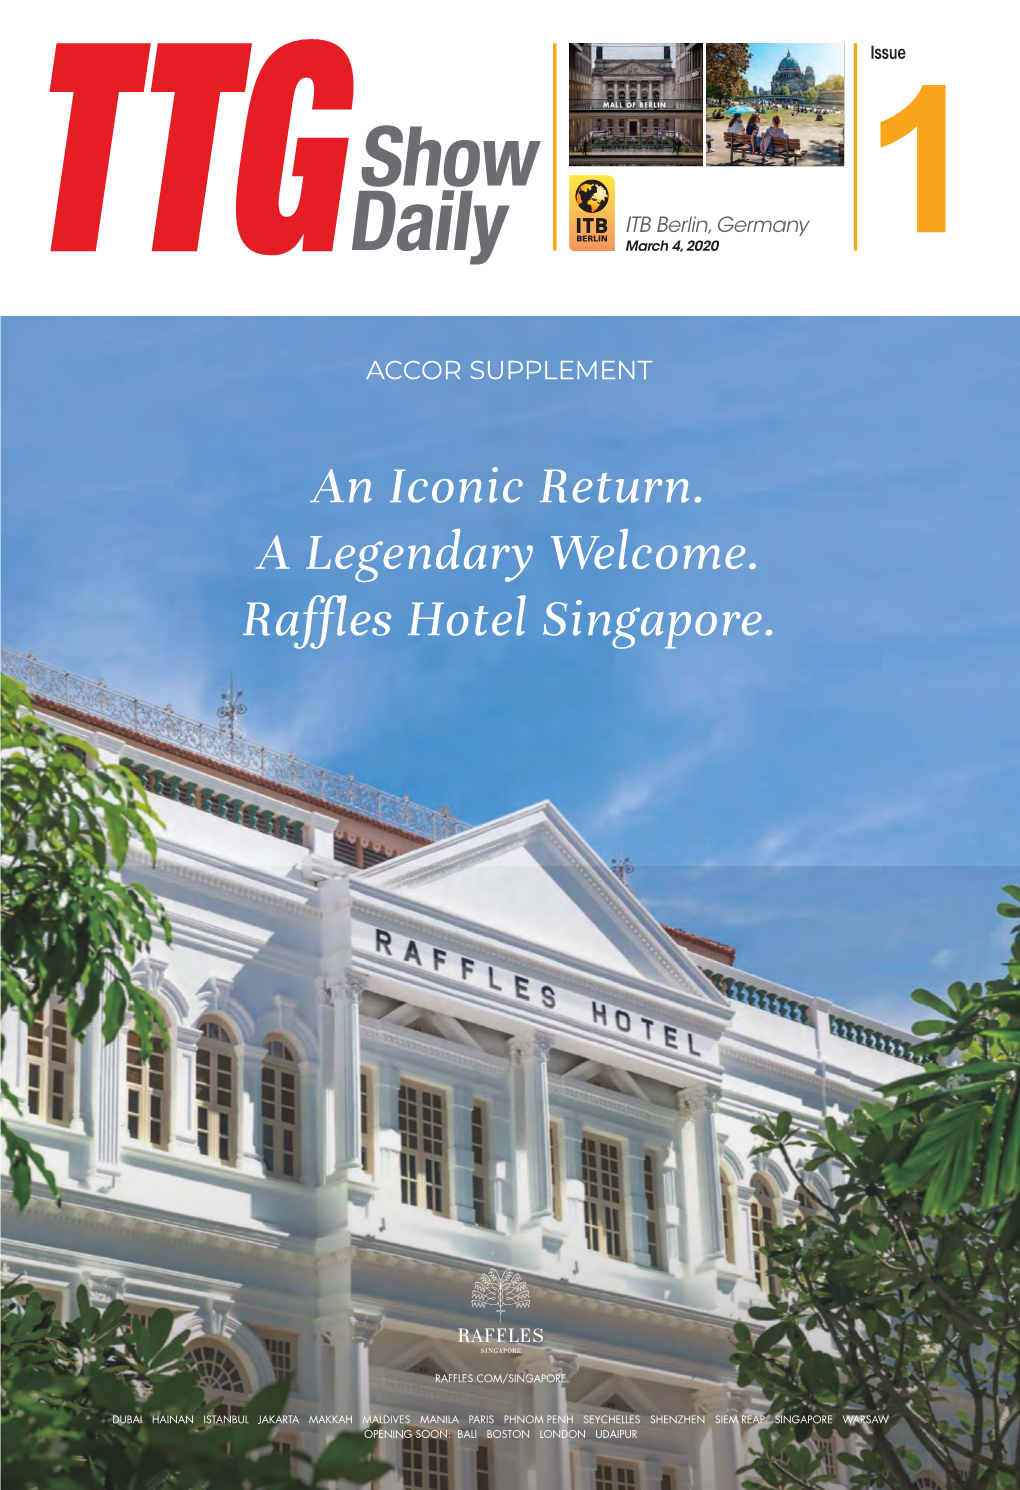 An Iconic Return. a Legendary Welcome. Raffles Hotel Singapore